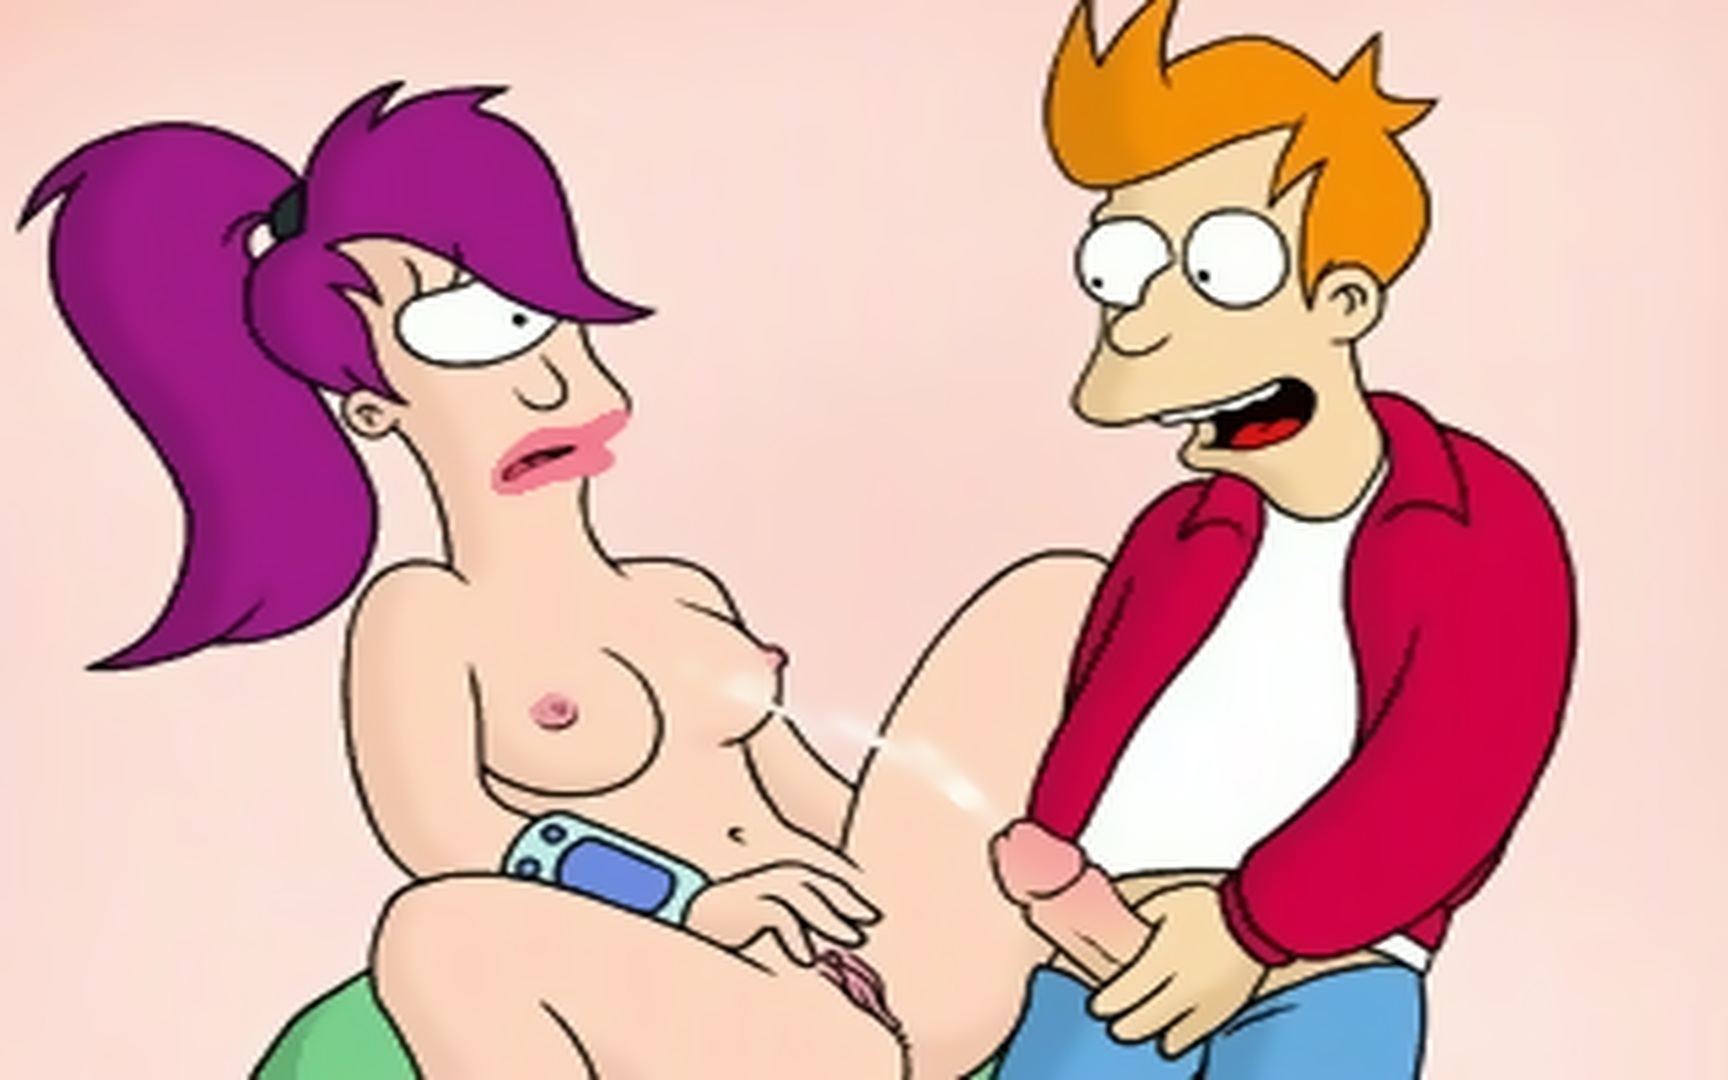 American Cartoon Porn With Captions - Cartoon porn insanity with Flintstones, American Dad etc